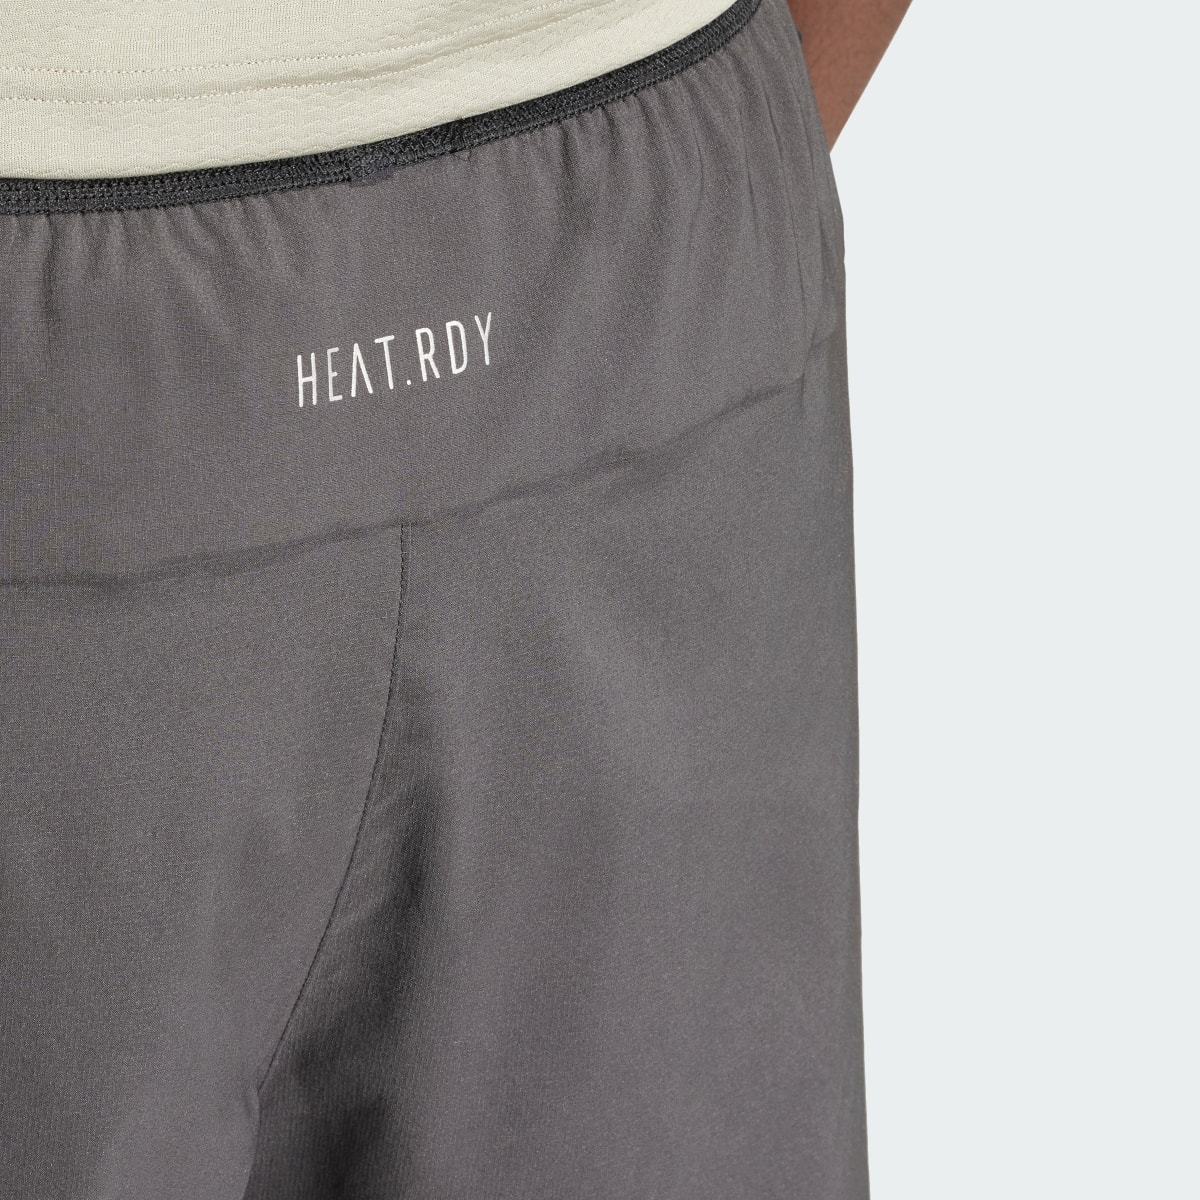 Adidas Pantalón corto HIIT Workout HEAT.RDY 2-in-1. 6